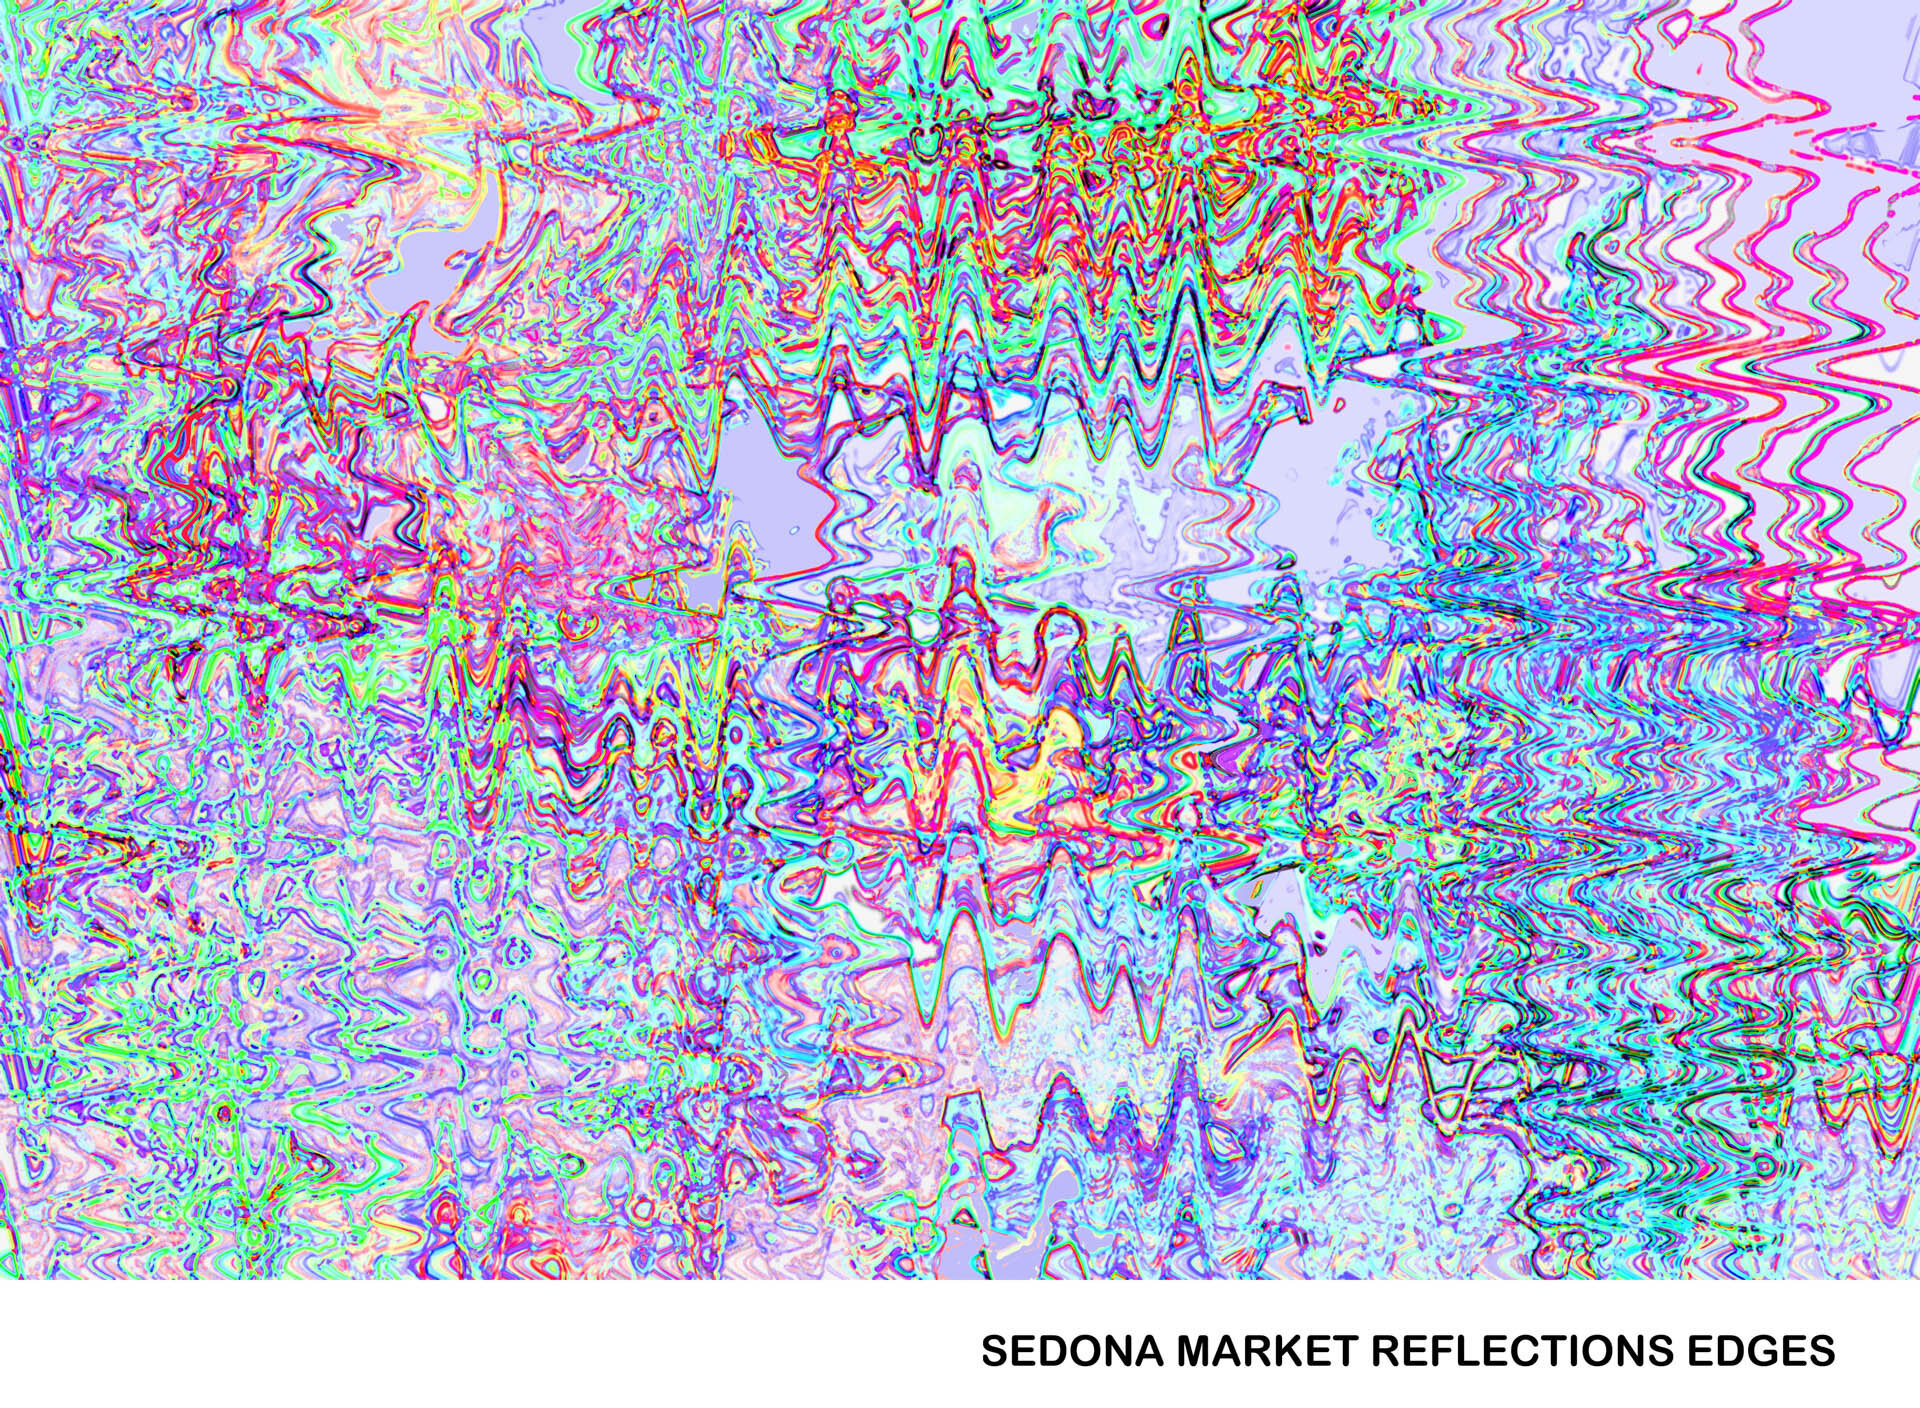 Sedona Market Reflections edges'08psd  Titled.jpg